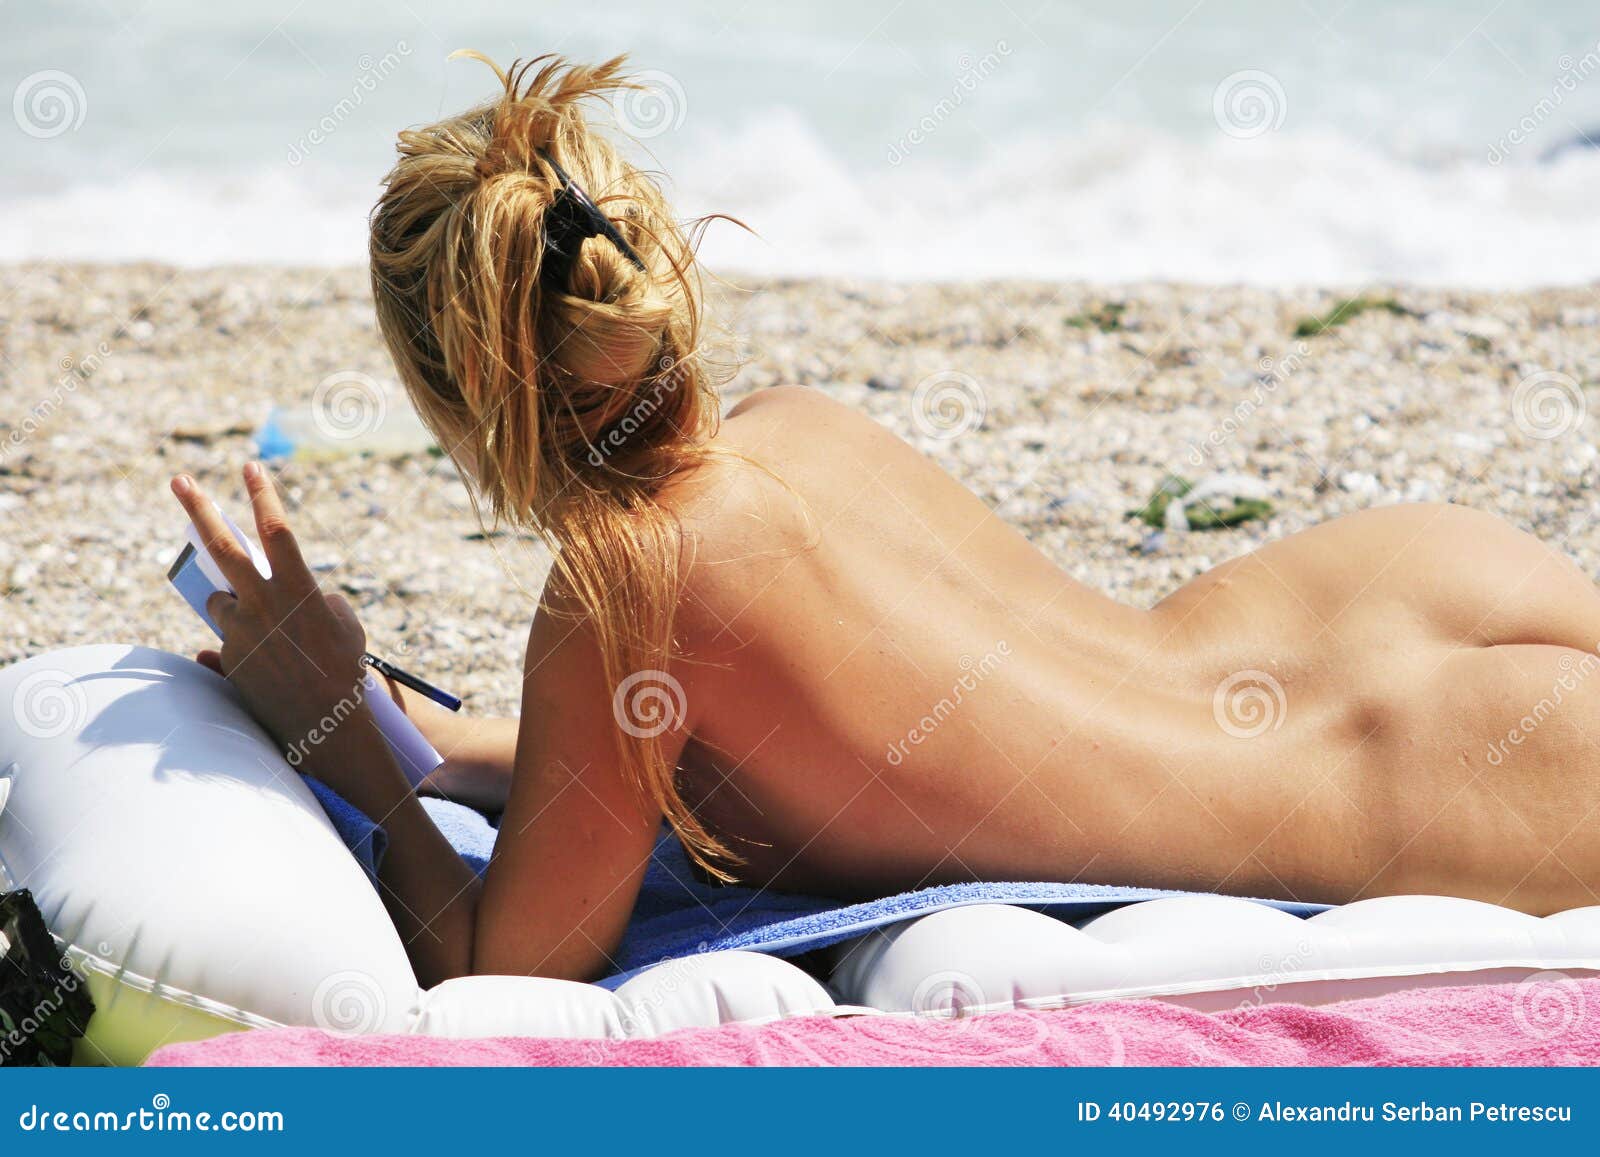 christine drakeford recommends Chicas Desnudas En Playas